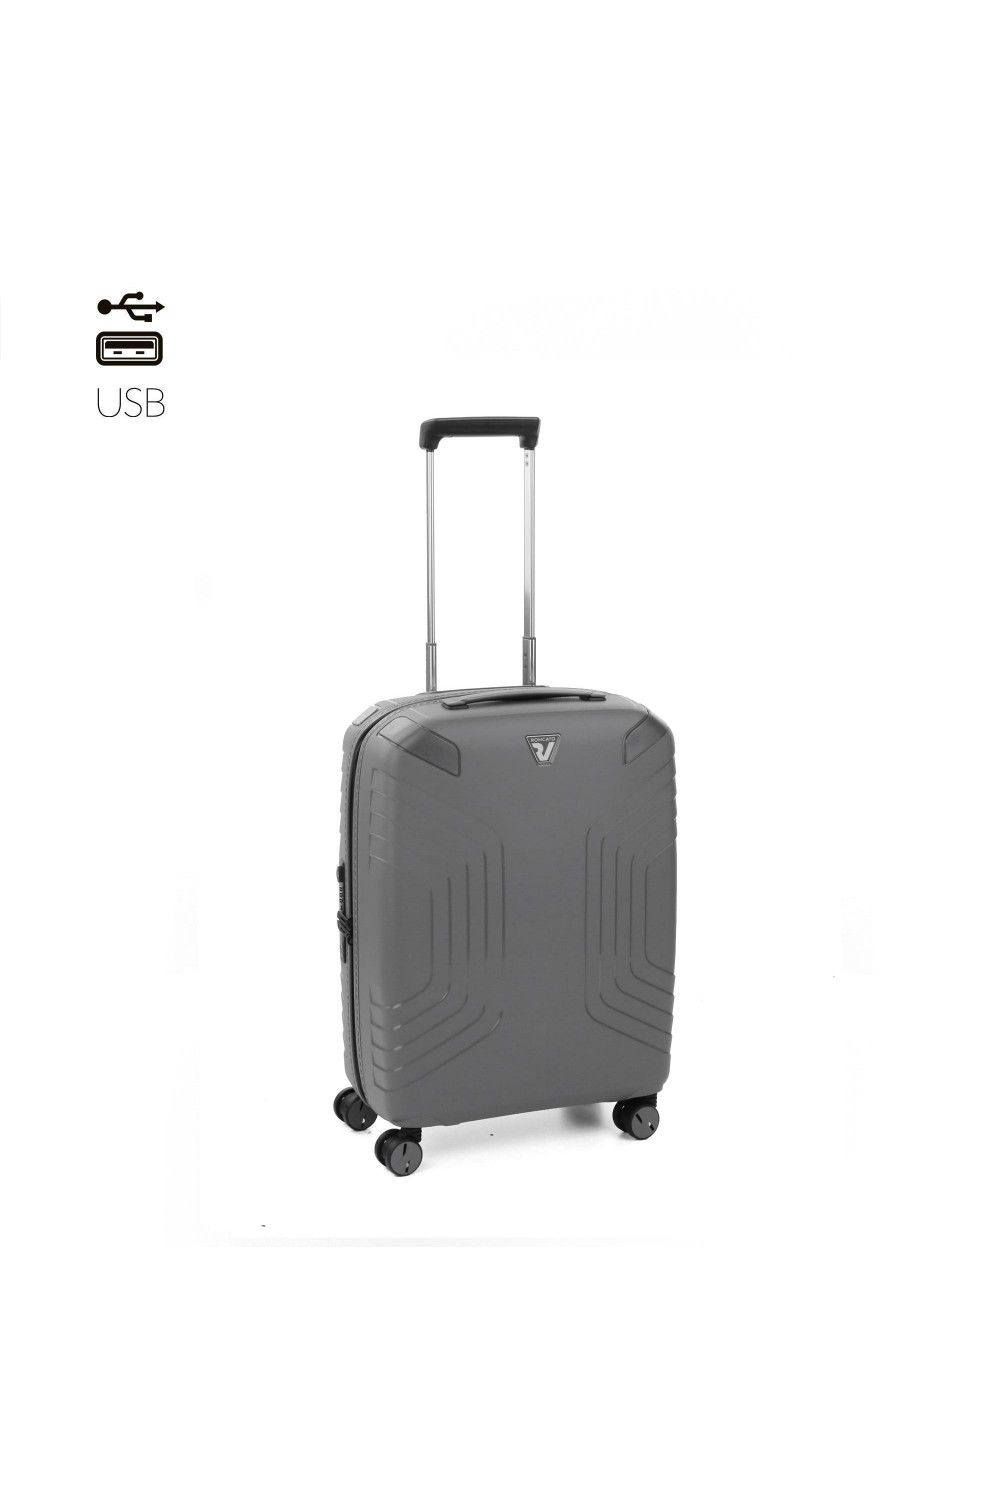 Hand luggage Roncato Ypsilon 4 55x40x20cm 4 wheels USB